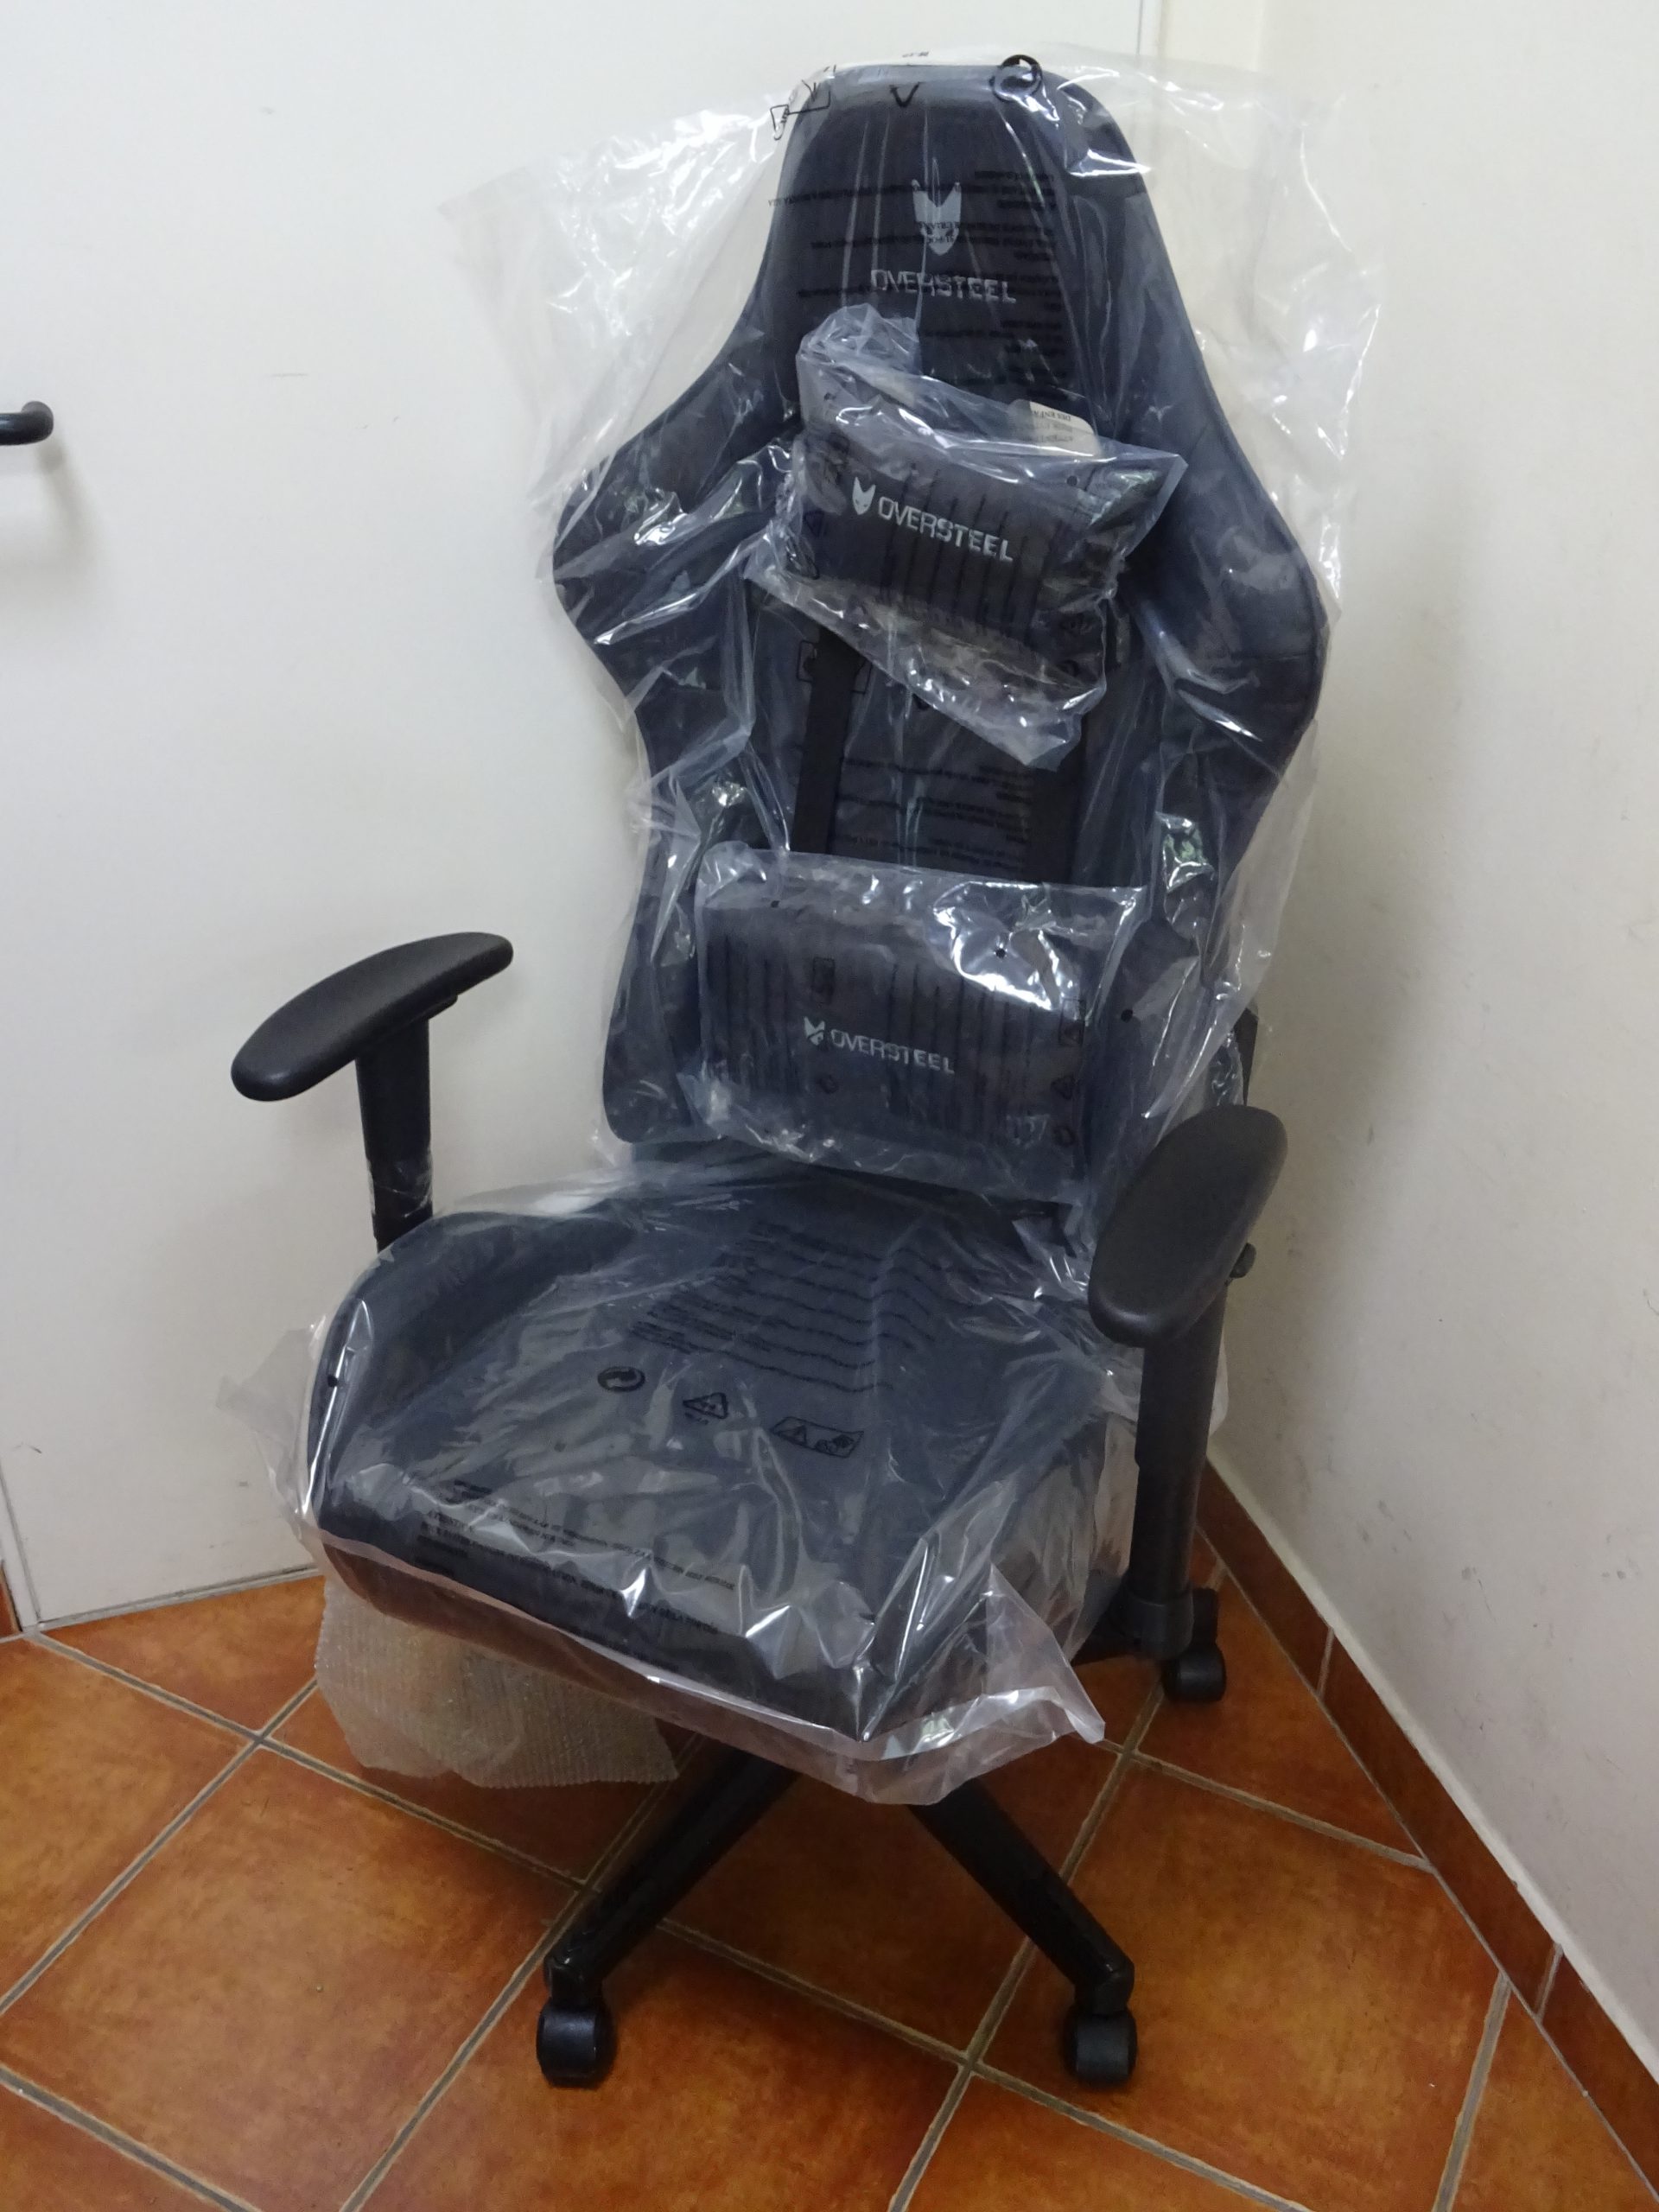 Oversteel Ultimet fekete Gamer- irodai szék, kiemelt kép